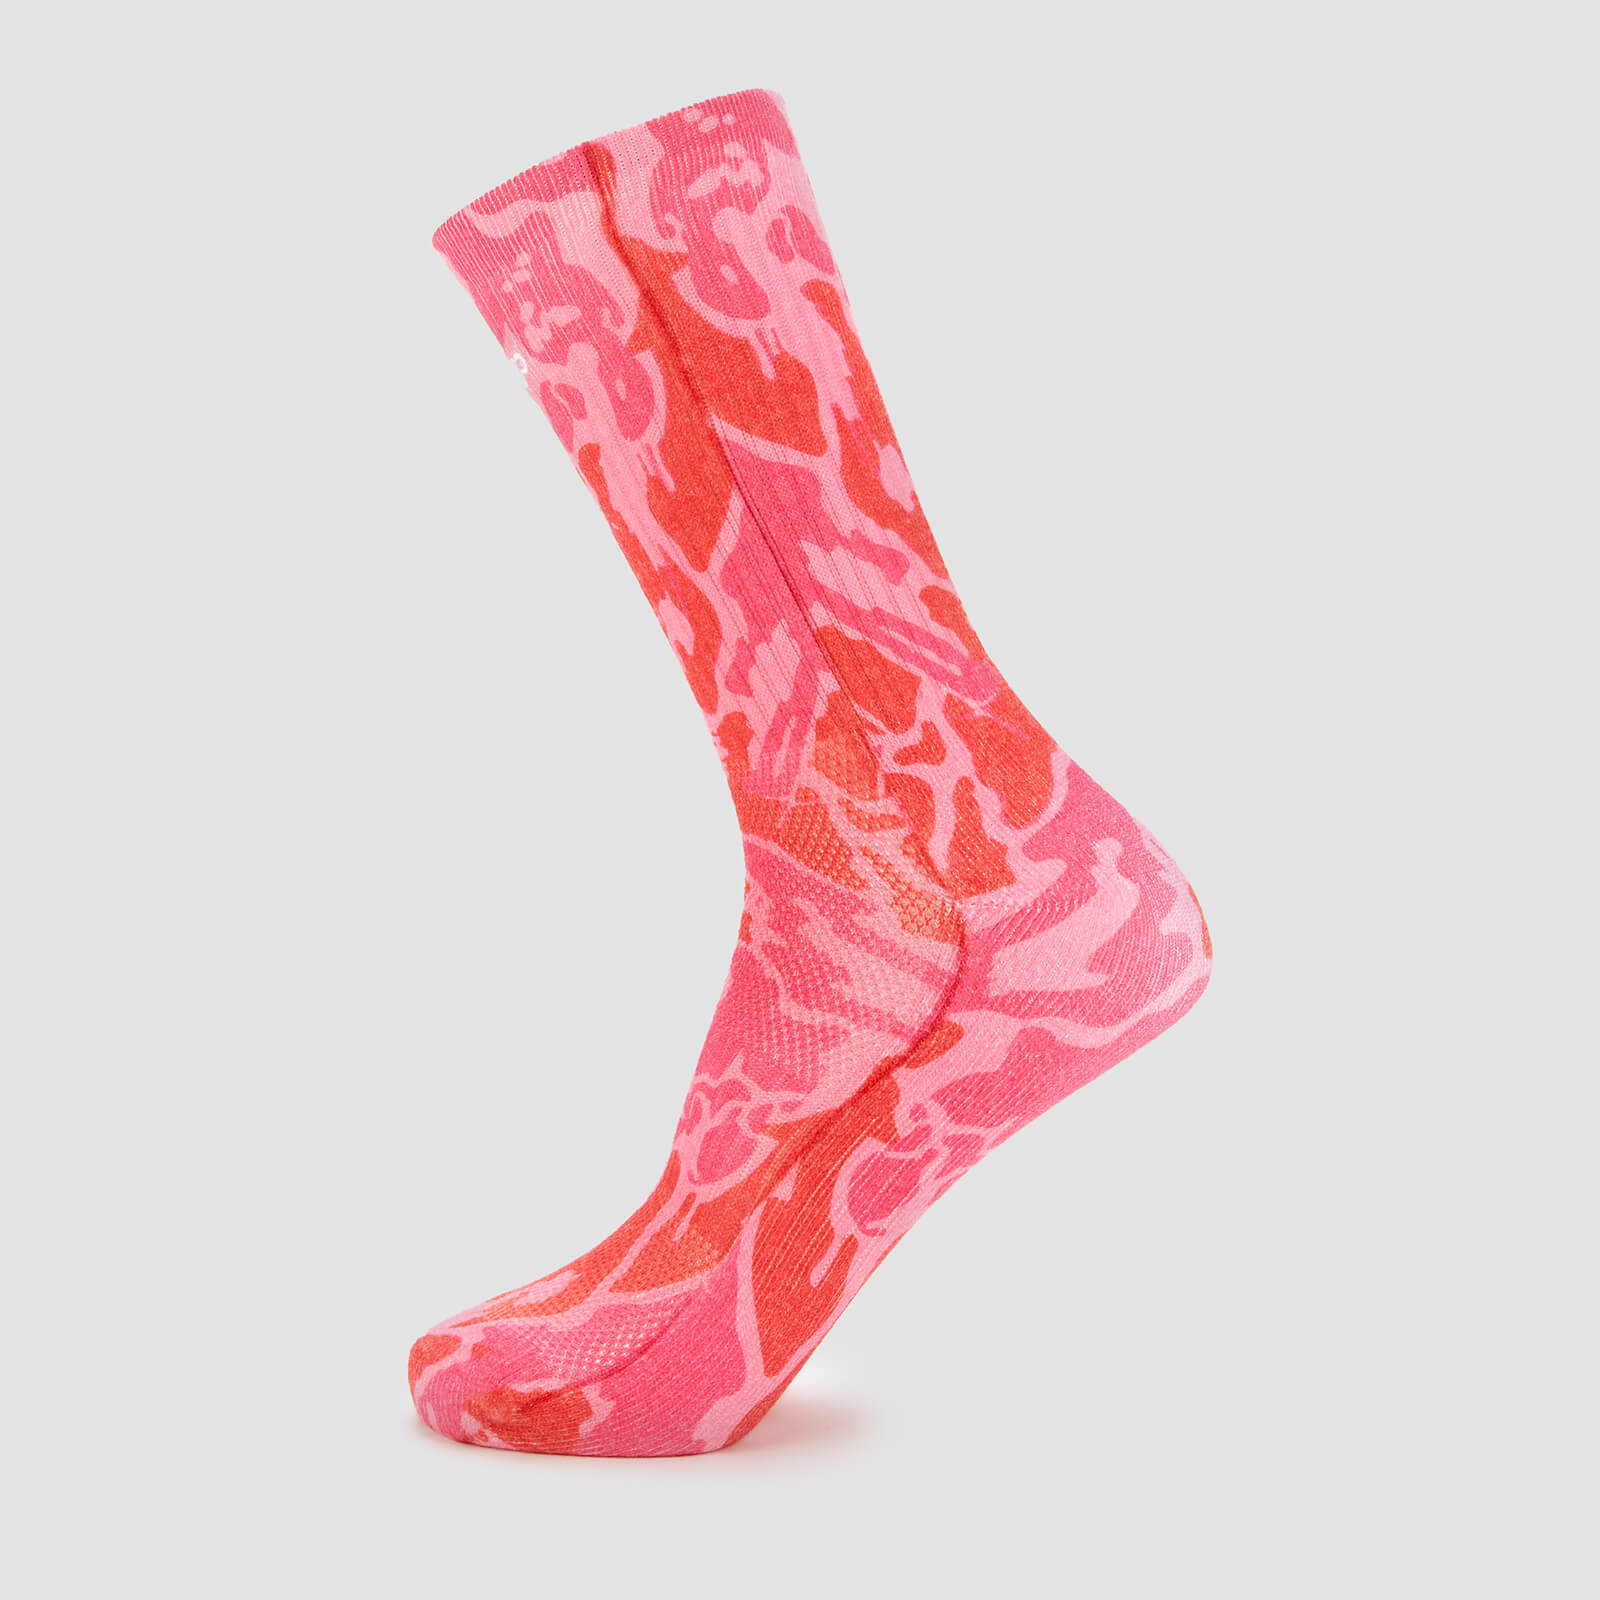 MP X Hexxee Adapt Socks - Pink Camo - Mens UK 6-8.5